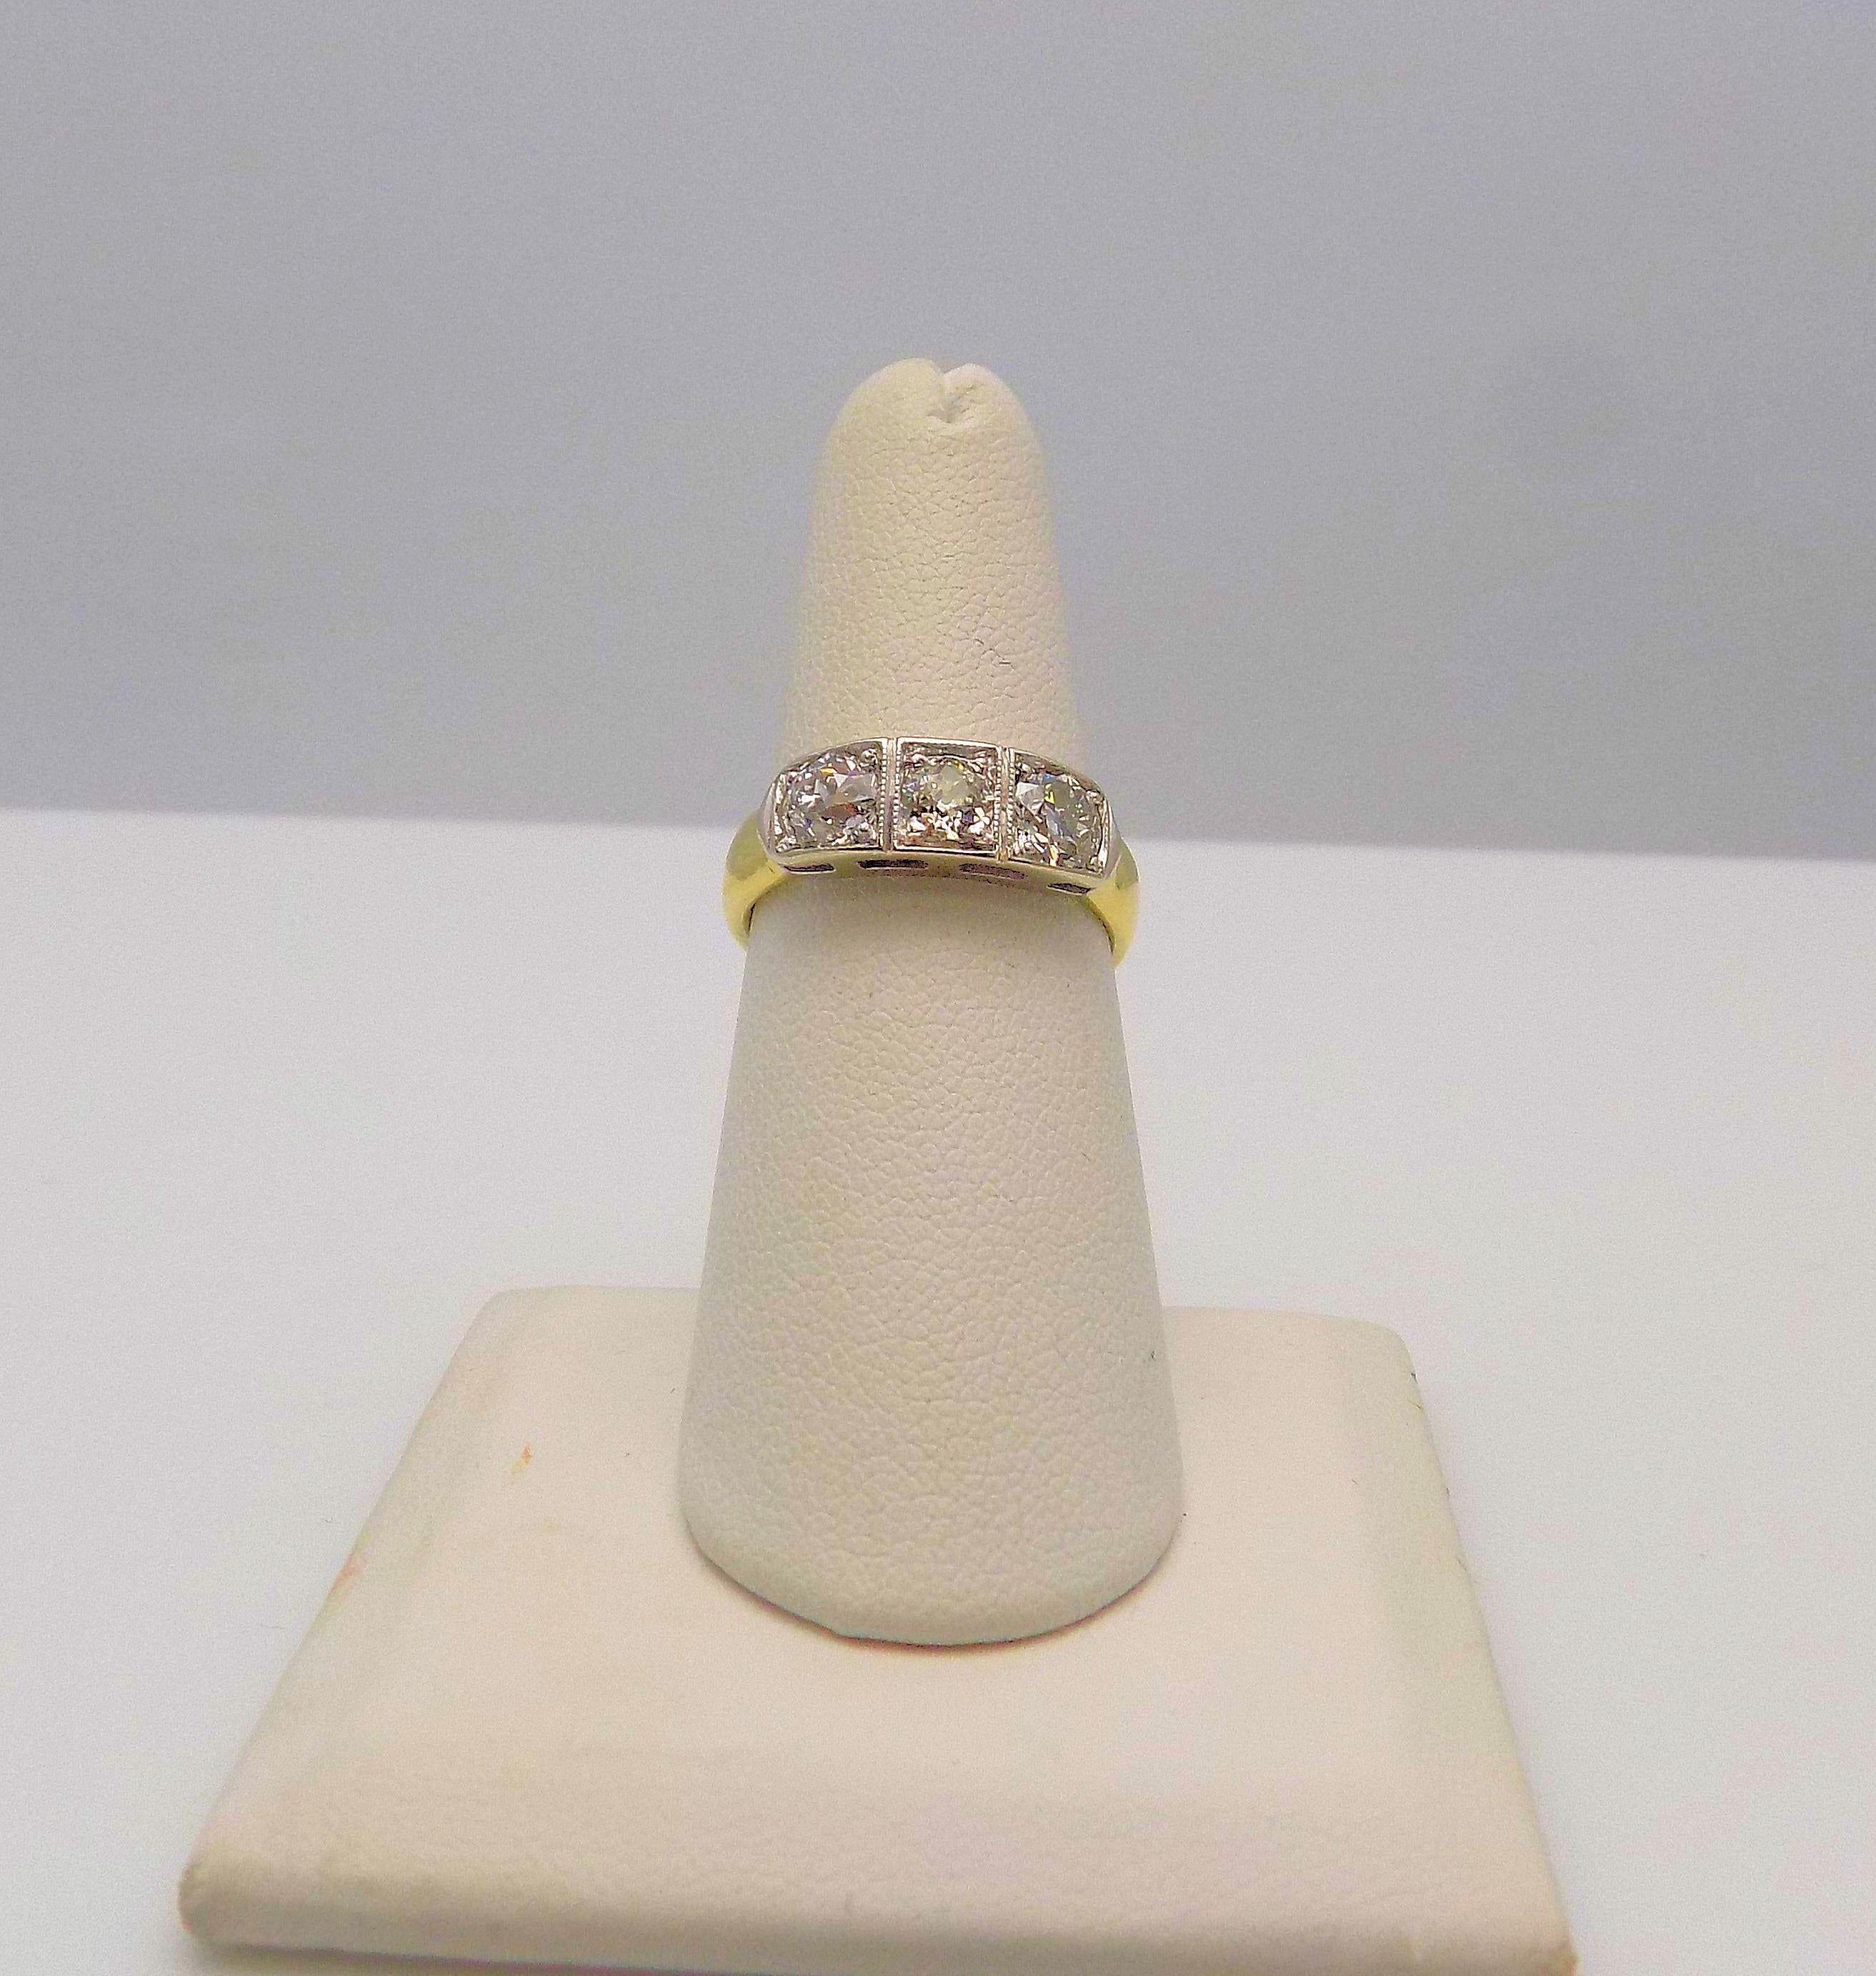 18 Karat Yellow Gold and 14 Karat White Gold 3 Stone Ring featuring 3 European Cut Diamonds 1.33 Carat Total Weight; SI1-SI2, I-J; 4 mm Band; Finger Size 7; 3.9 DWT or 6.07 Grams.